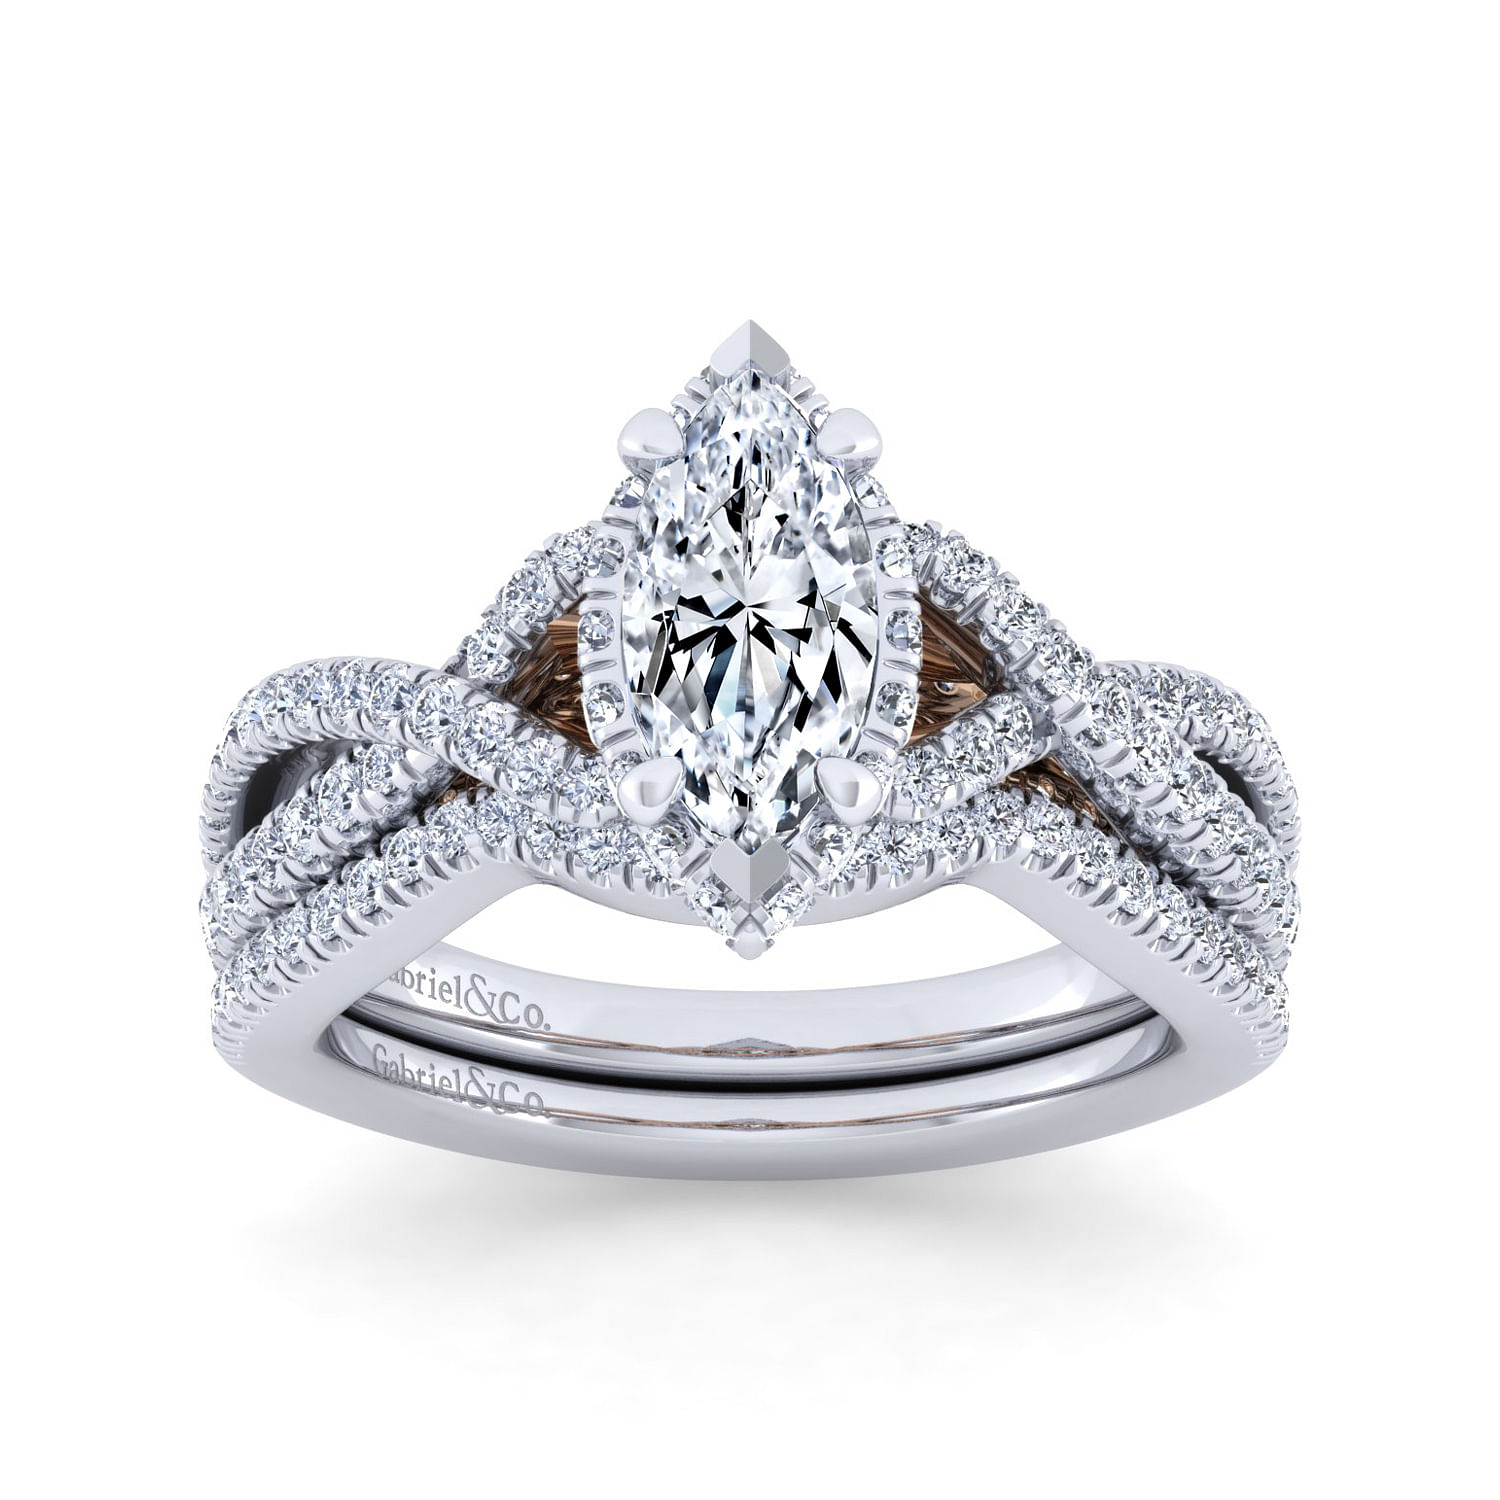 14K White-Rose Gold Twisted Marquise Shape Diamond Engagement Ring